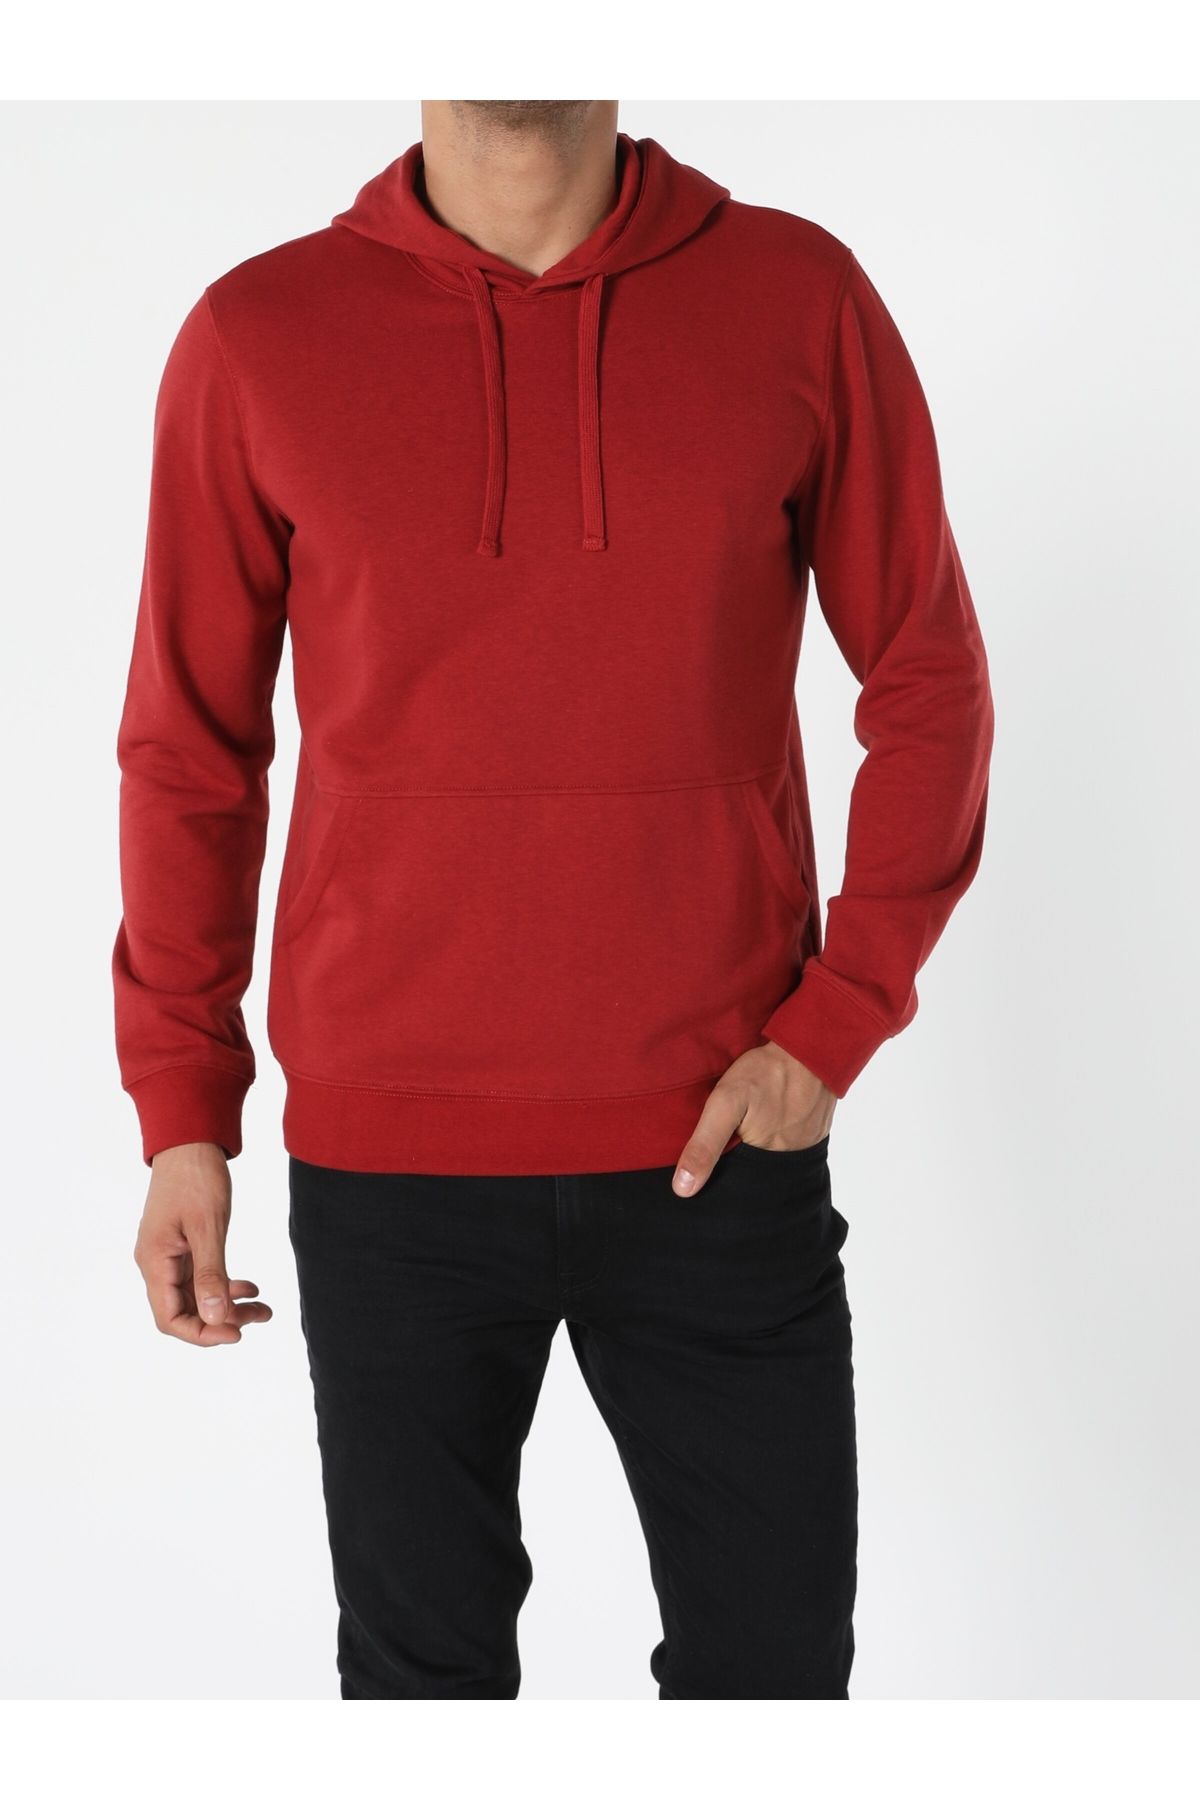 Colin’s Regular Fit Kapüşonlu Kırmızı Erkek Sweatshirt Cl1055785